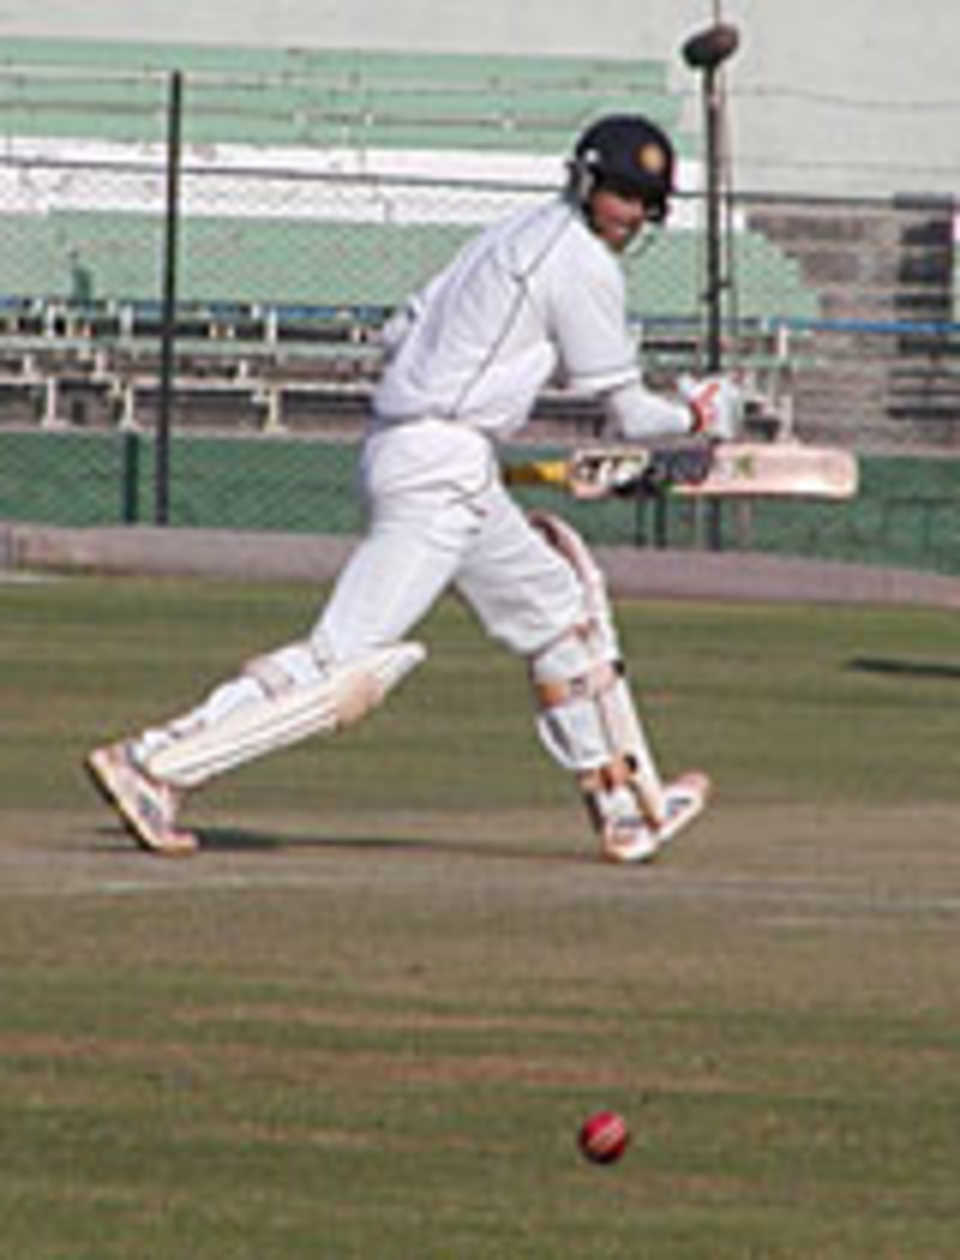 Yusuf Pathan scored 113 off 81 balls